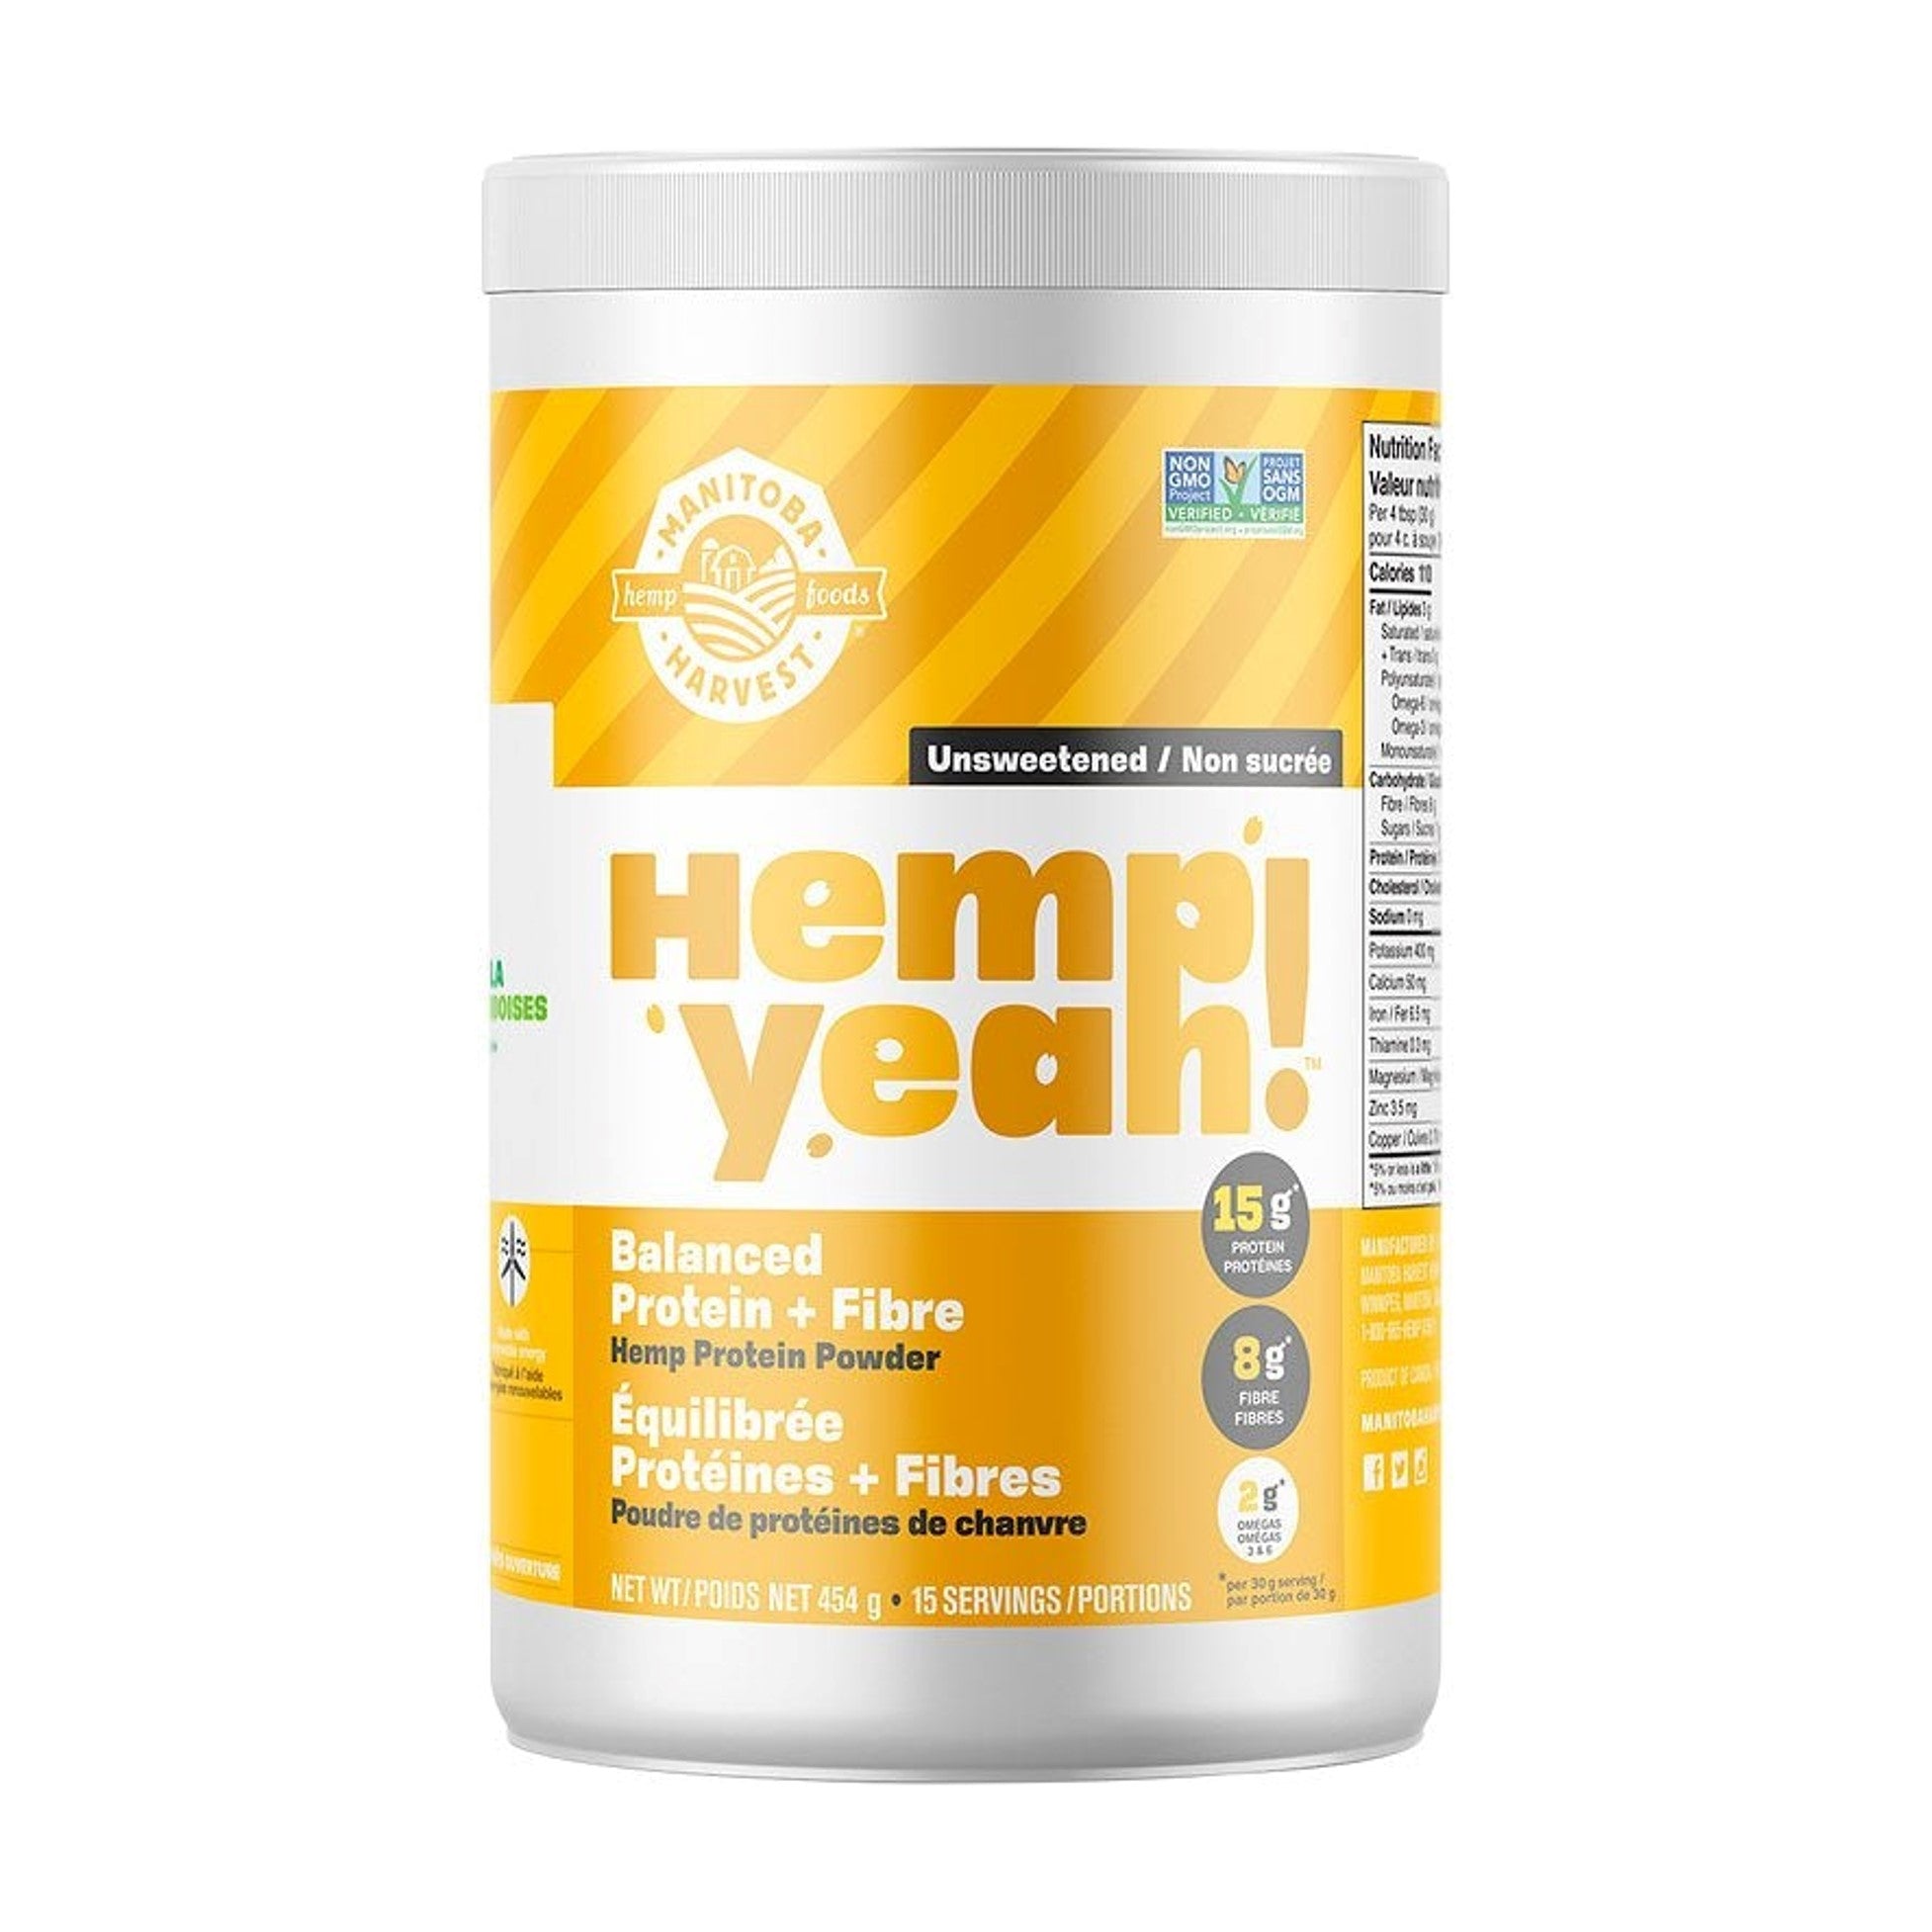 Hemp Yeah Balanced + Protein + Fiber 454g